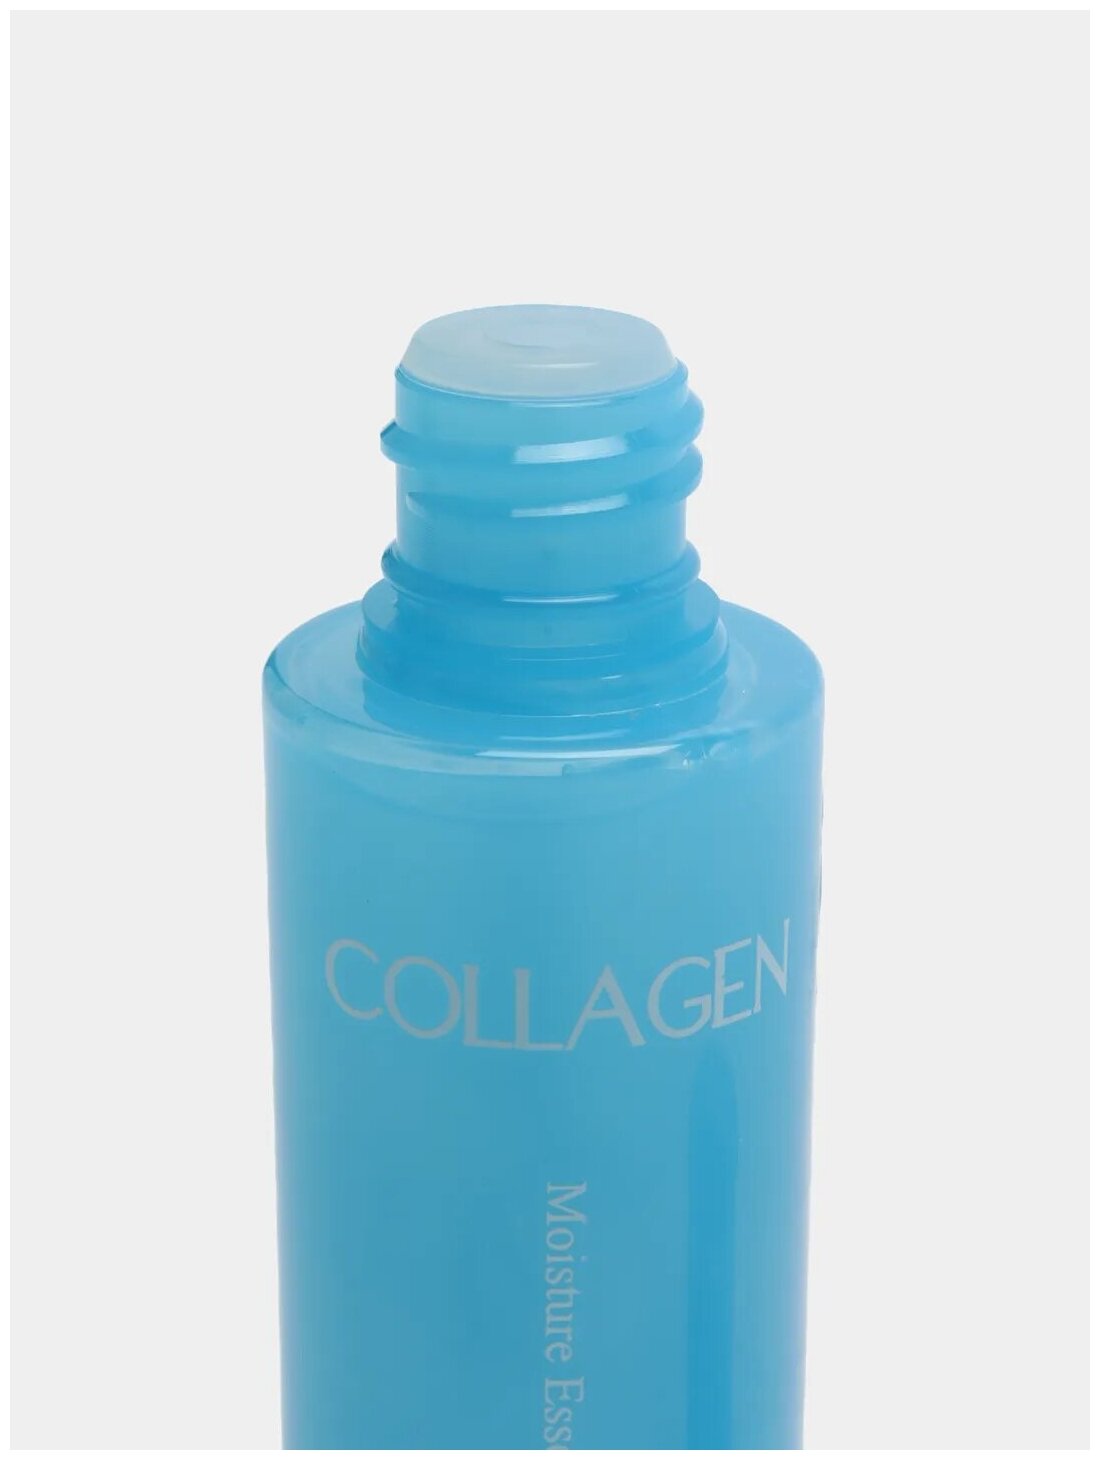 Тонер для лица (миниатюра) коллаген ENOUGH Collagen Moisture Essential Skin, 30 мл.